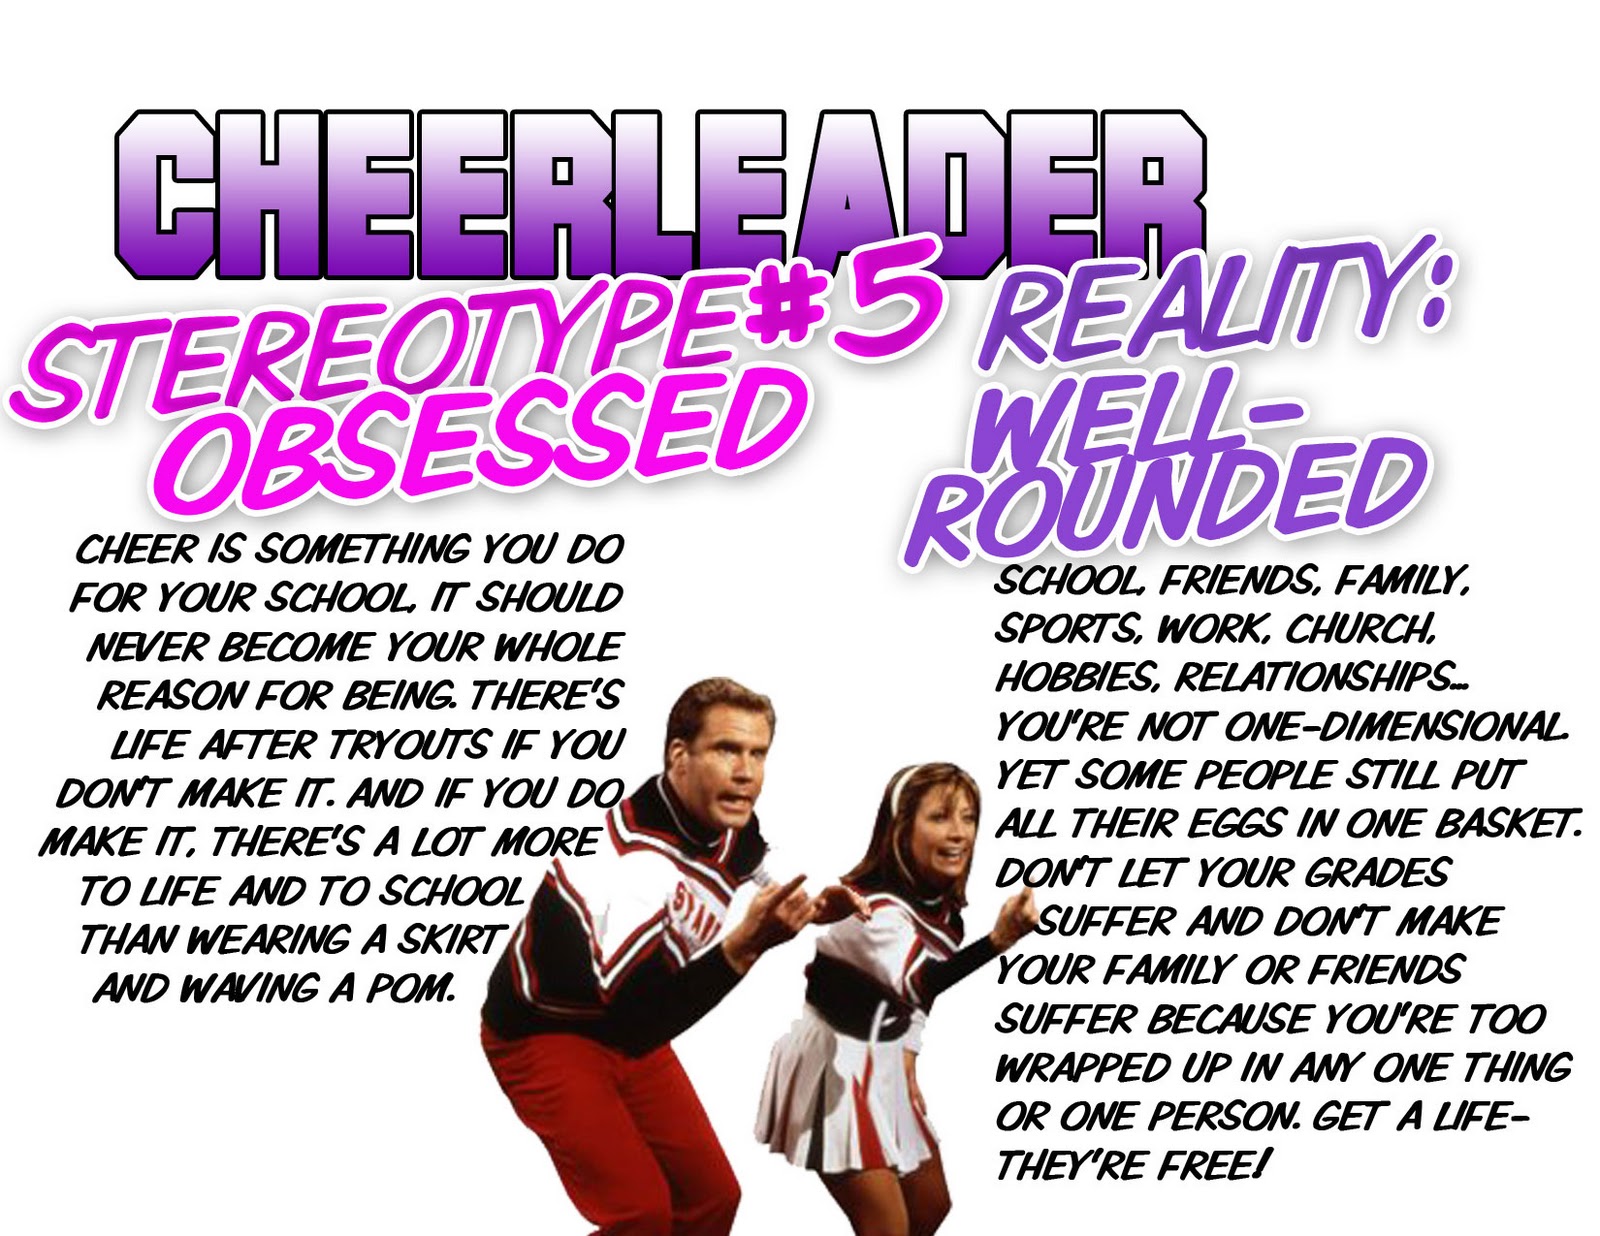 cheerleading stereotypes essays